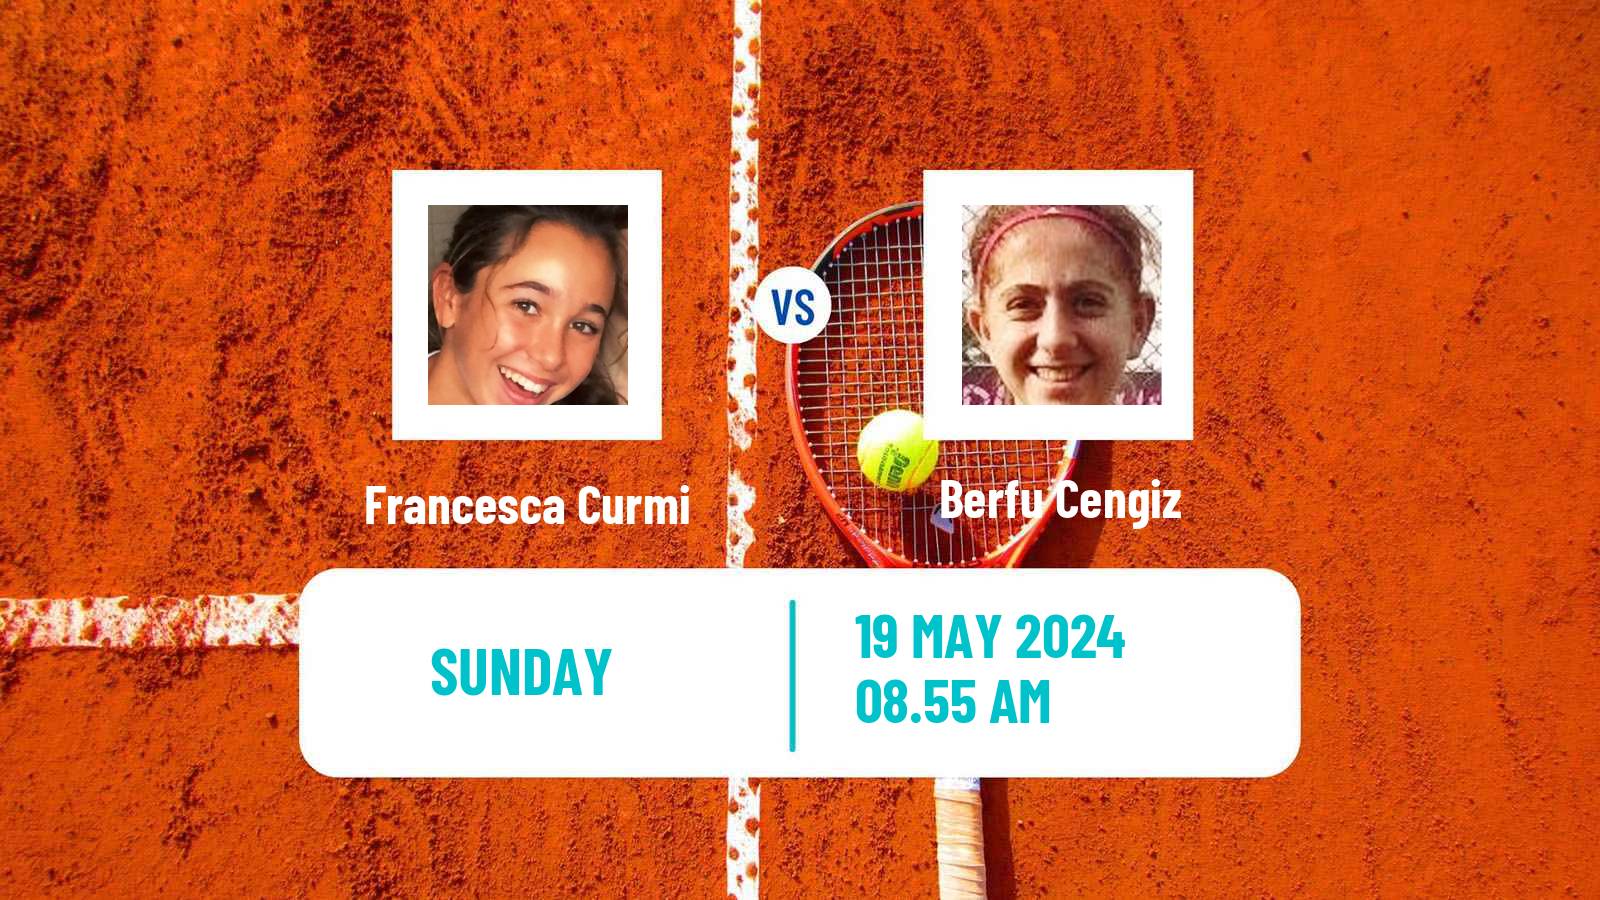 Tennis WTA Rabat Francesca Curmi - Berfu Cengiz